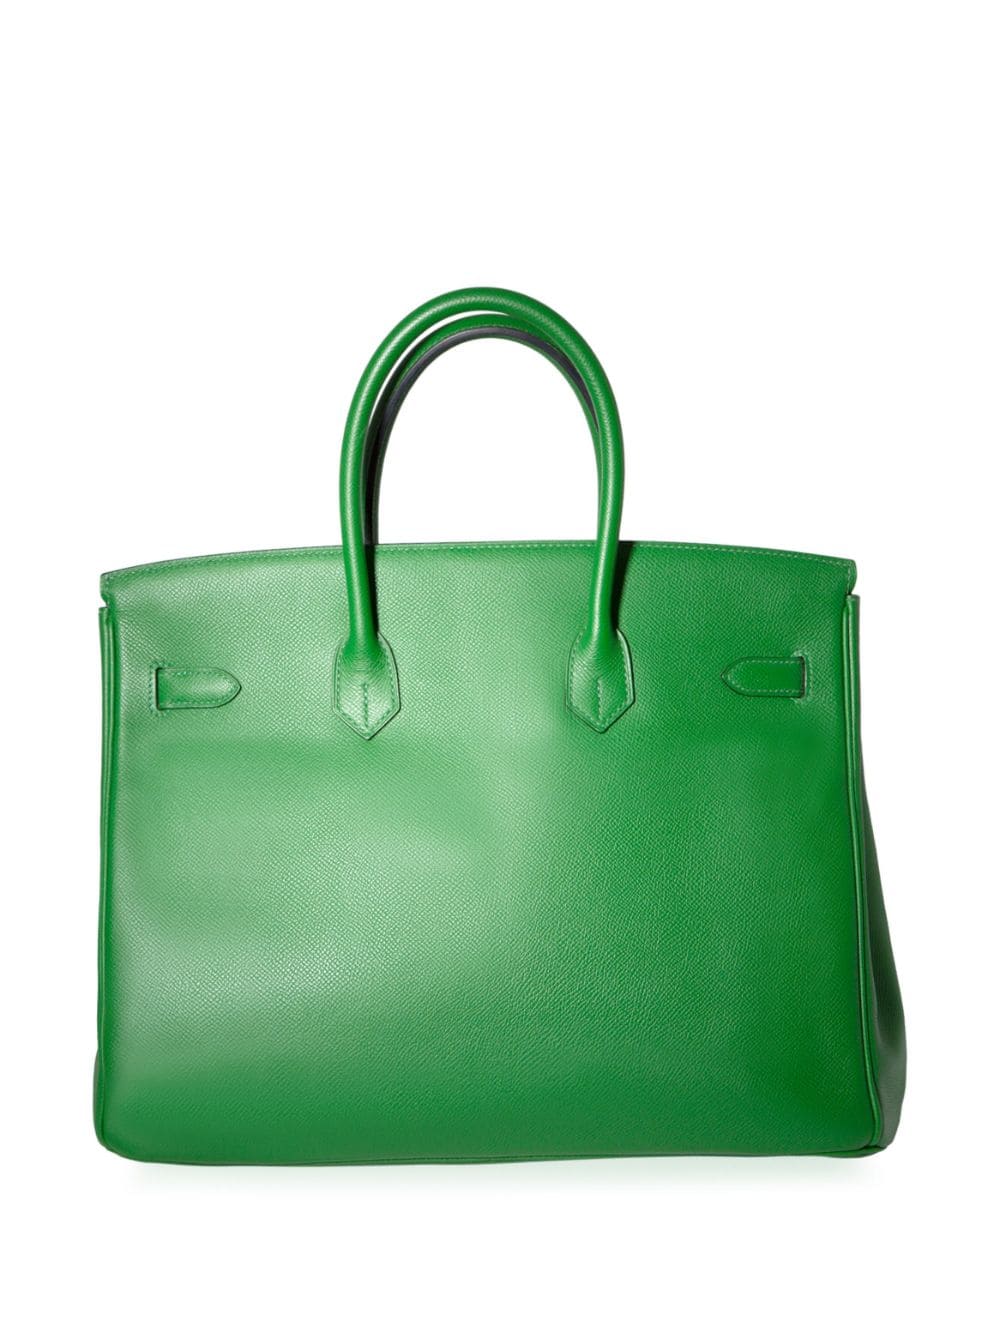 Hermès Pre-Owned 2010 Birkin 35 handbag - Groen